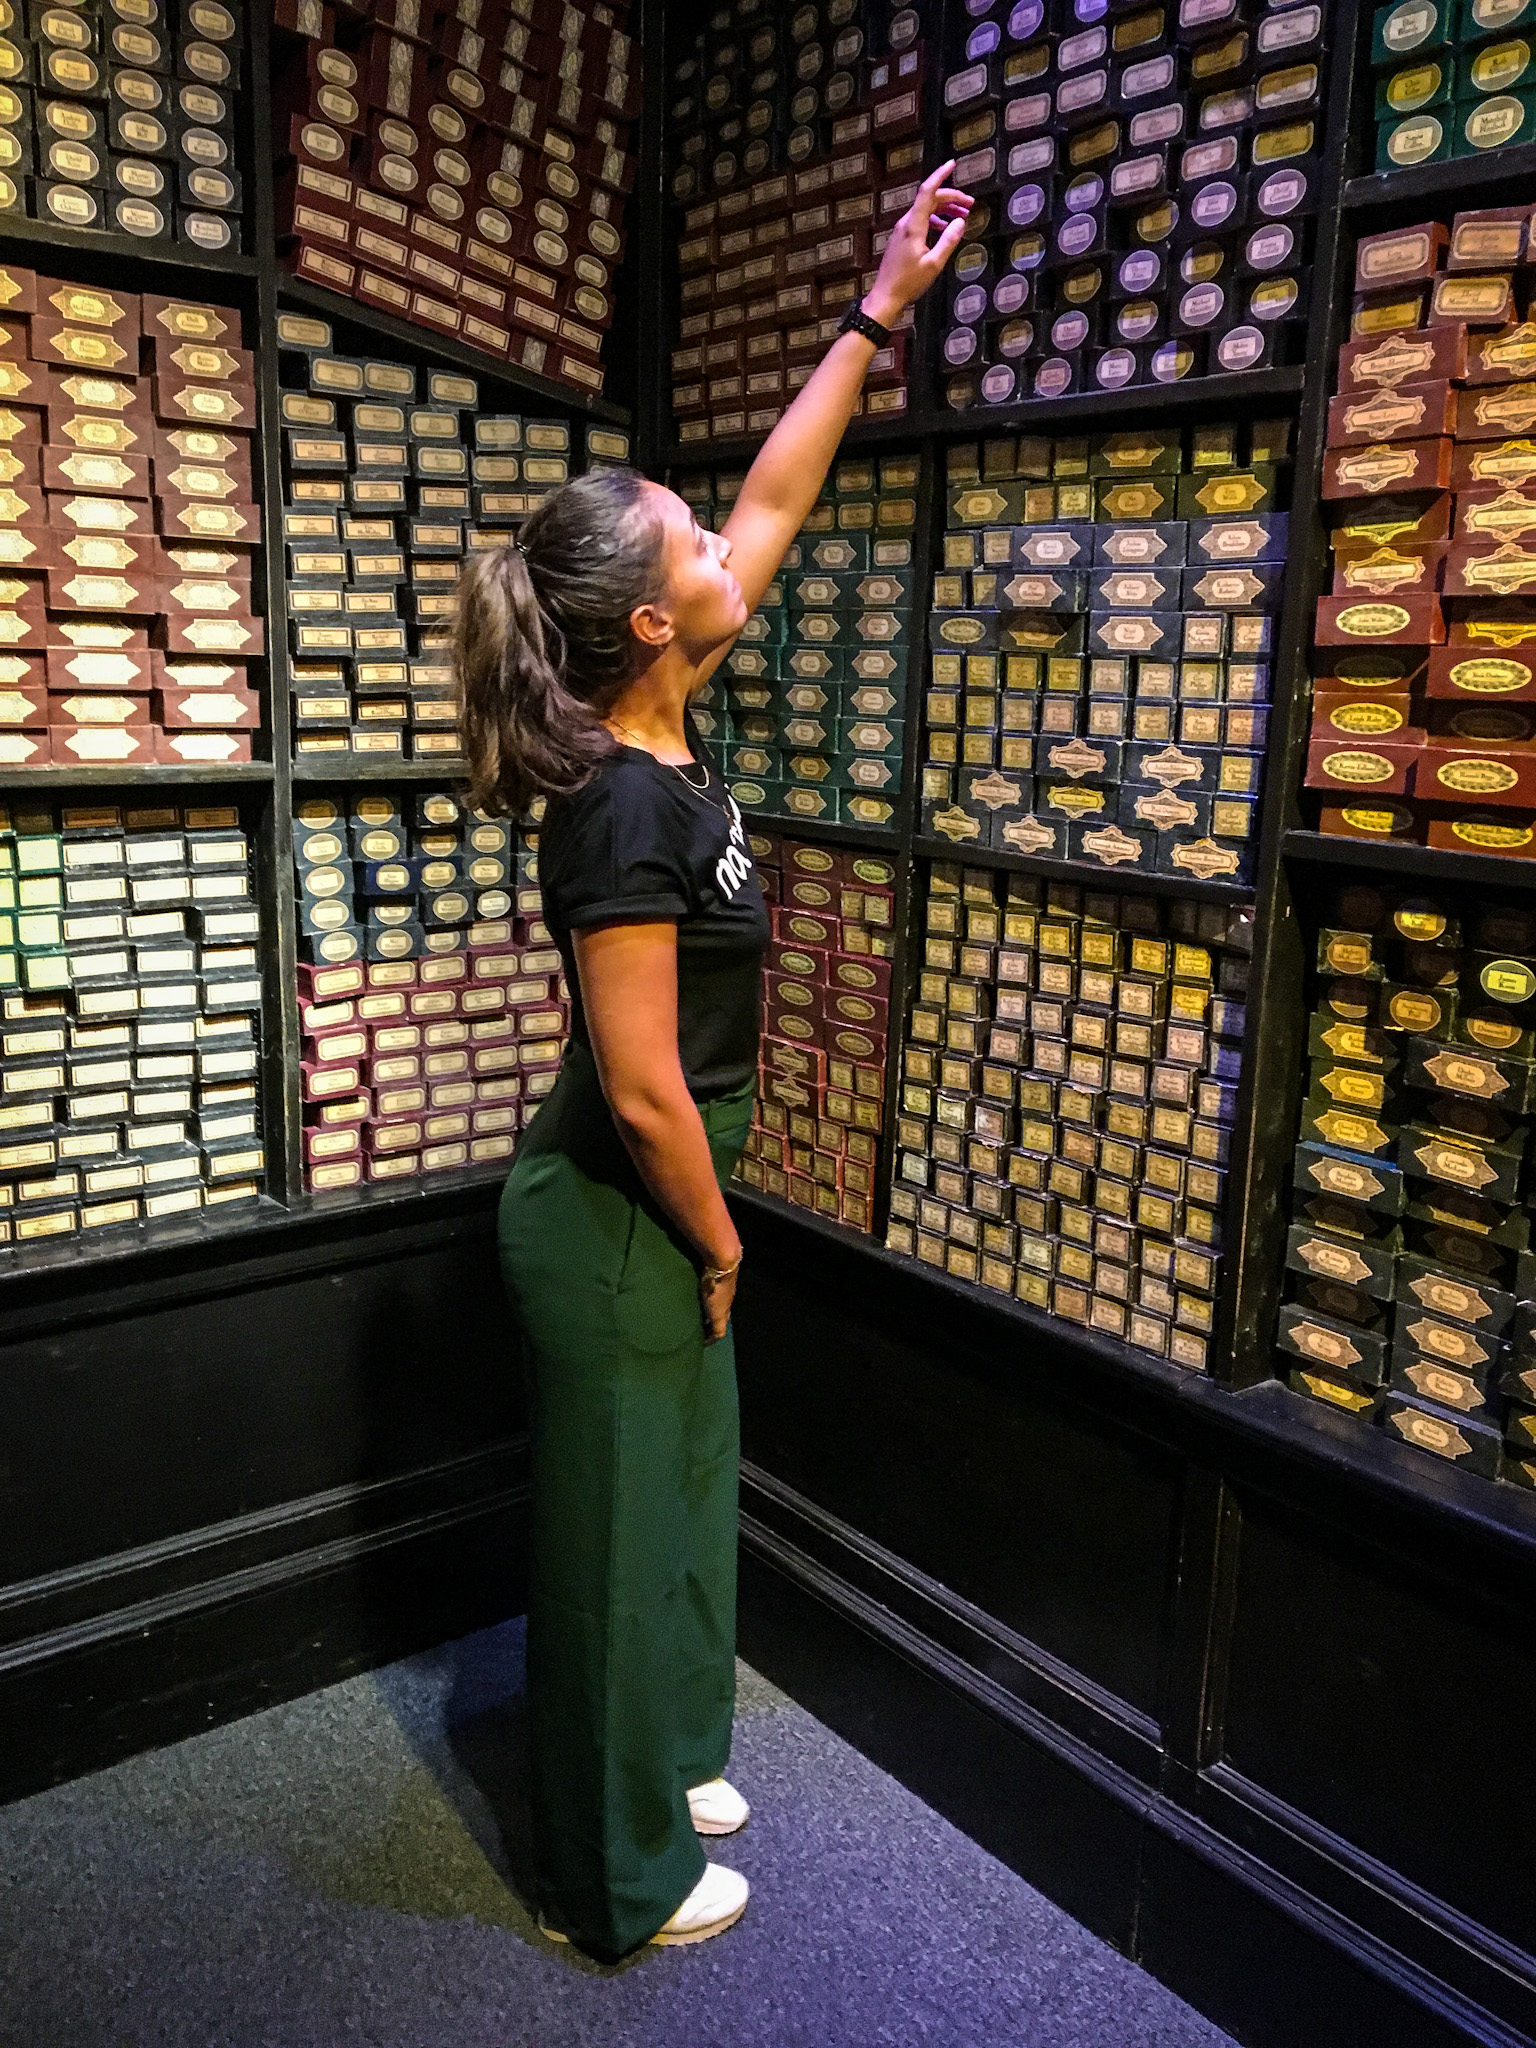 Woman choosing her wand at Ollivander's shop in the Warner Bros Studios in London